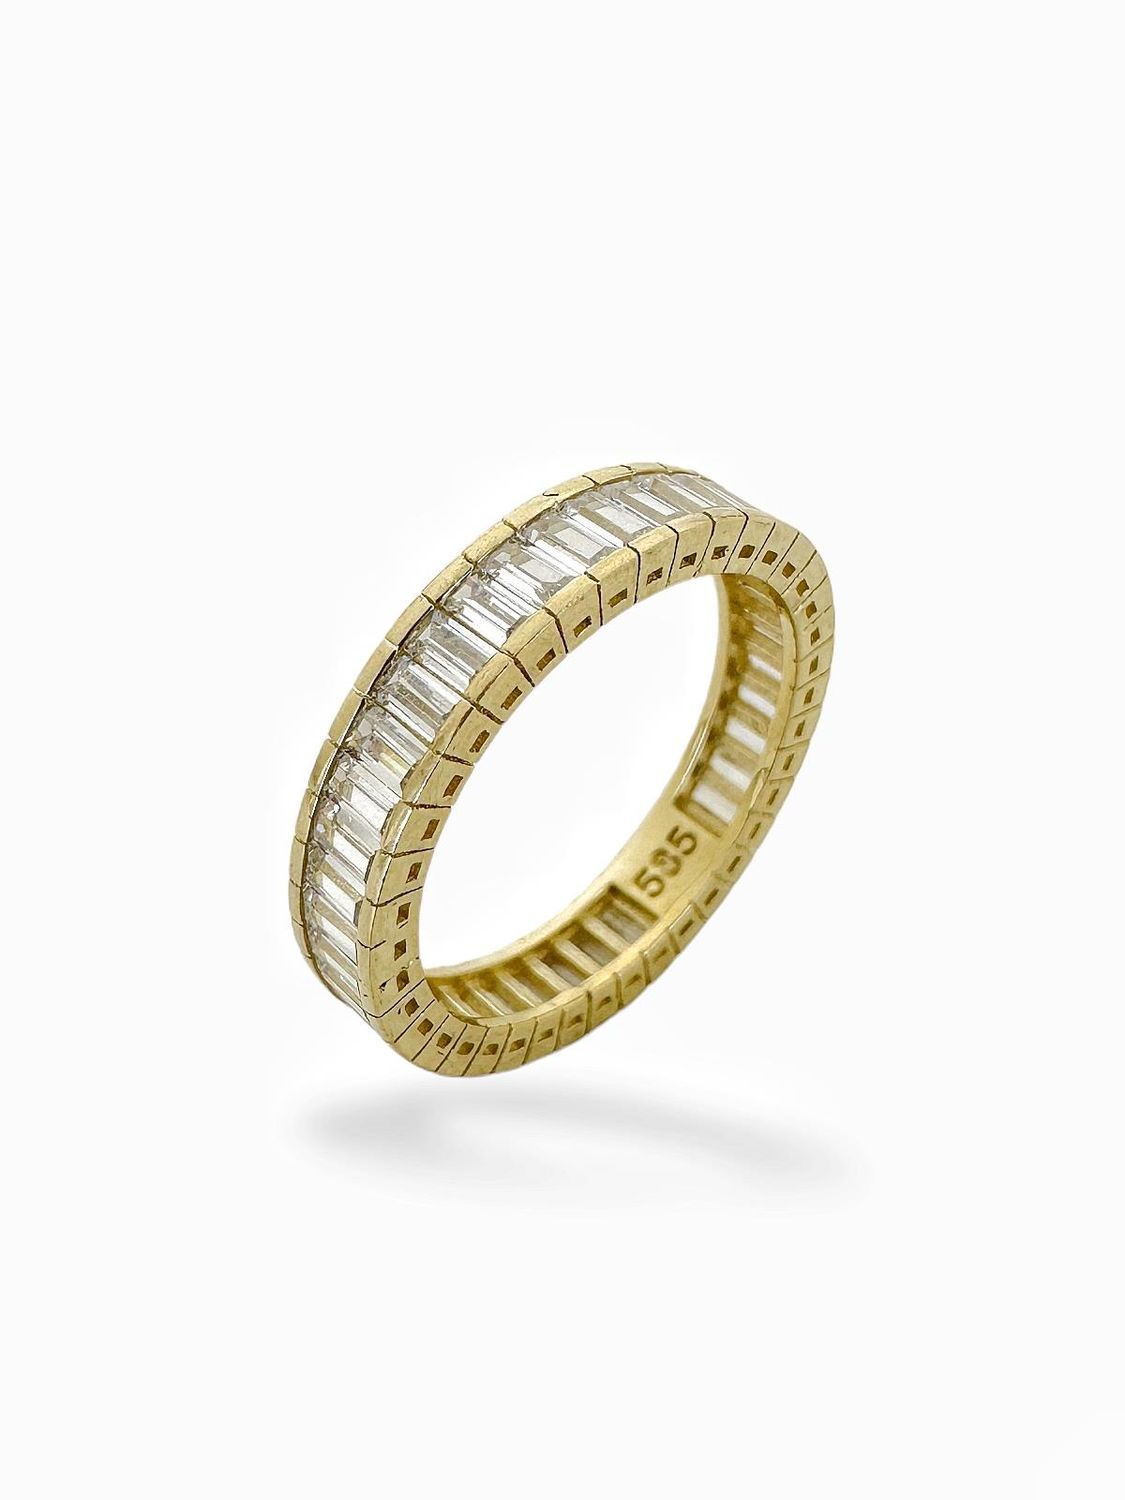 14K الذهب عيار 4 مم نموذج الماس خاتم الزركون الكامل الرغيف الفرنسي